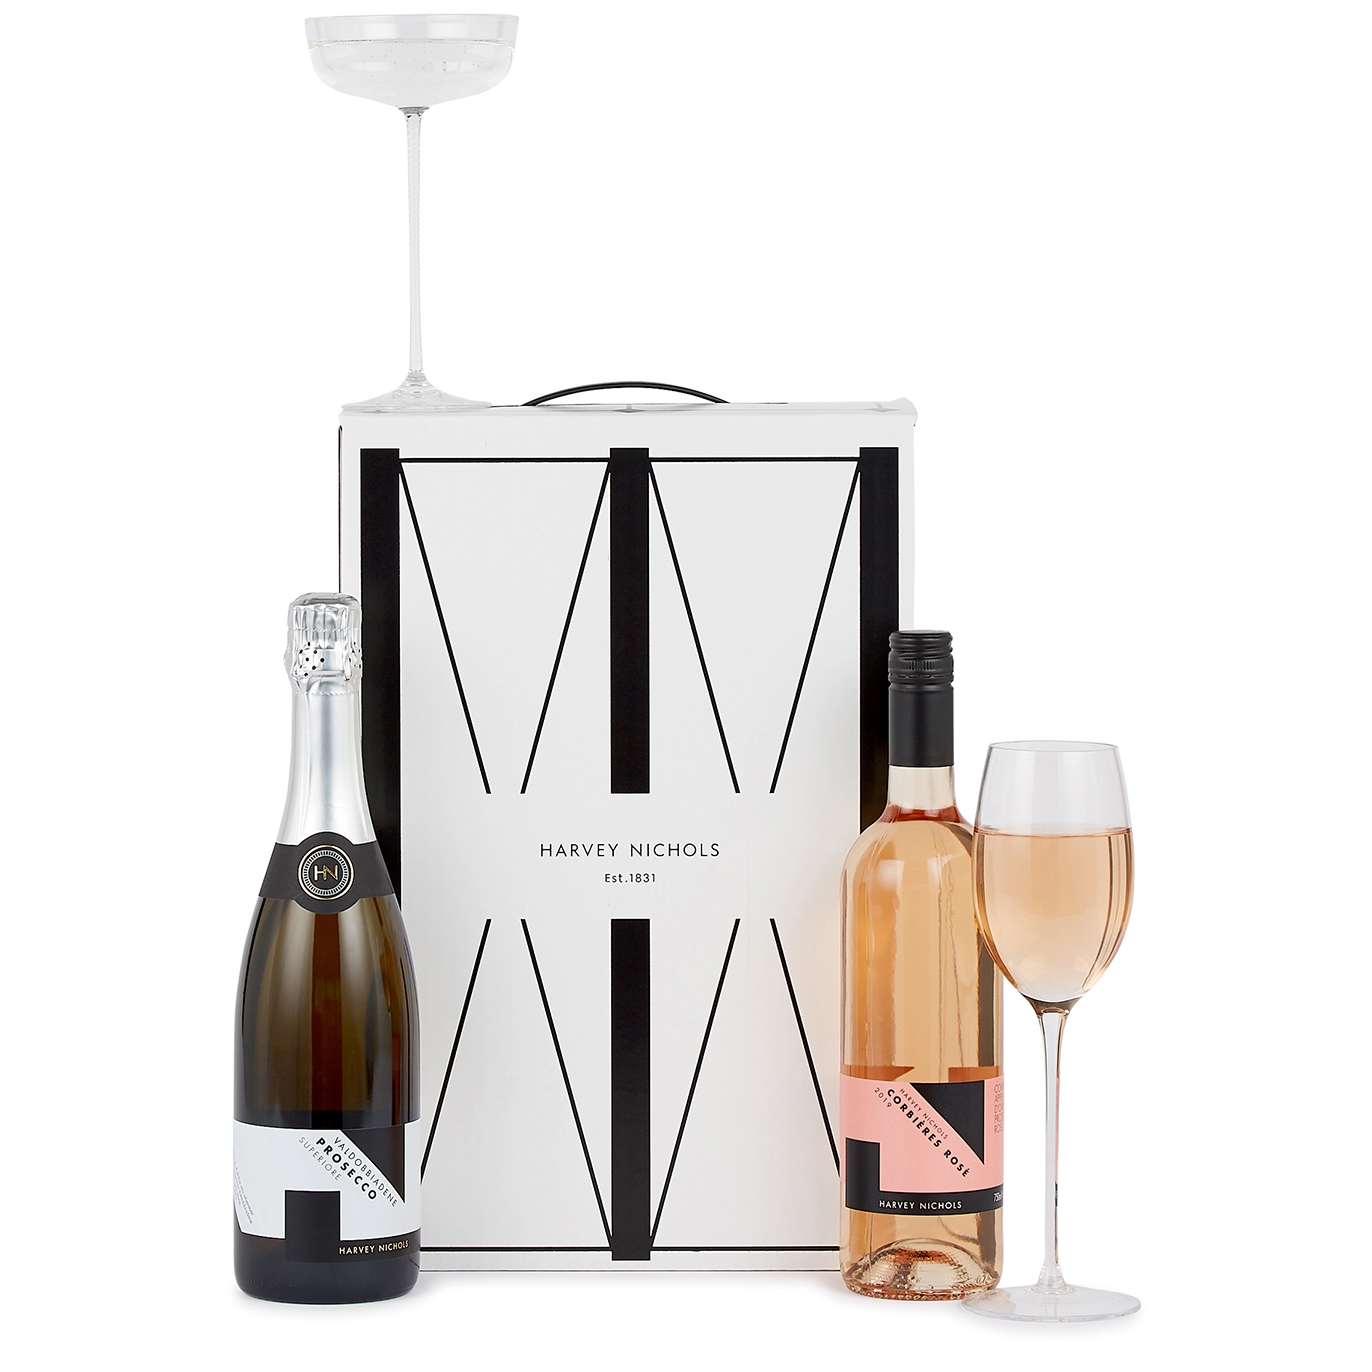 Harvey Nichols Prosecco & Rosé Wine Gift Box, Hamper, Corbières Rosé